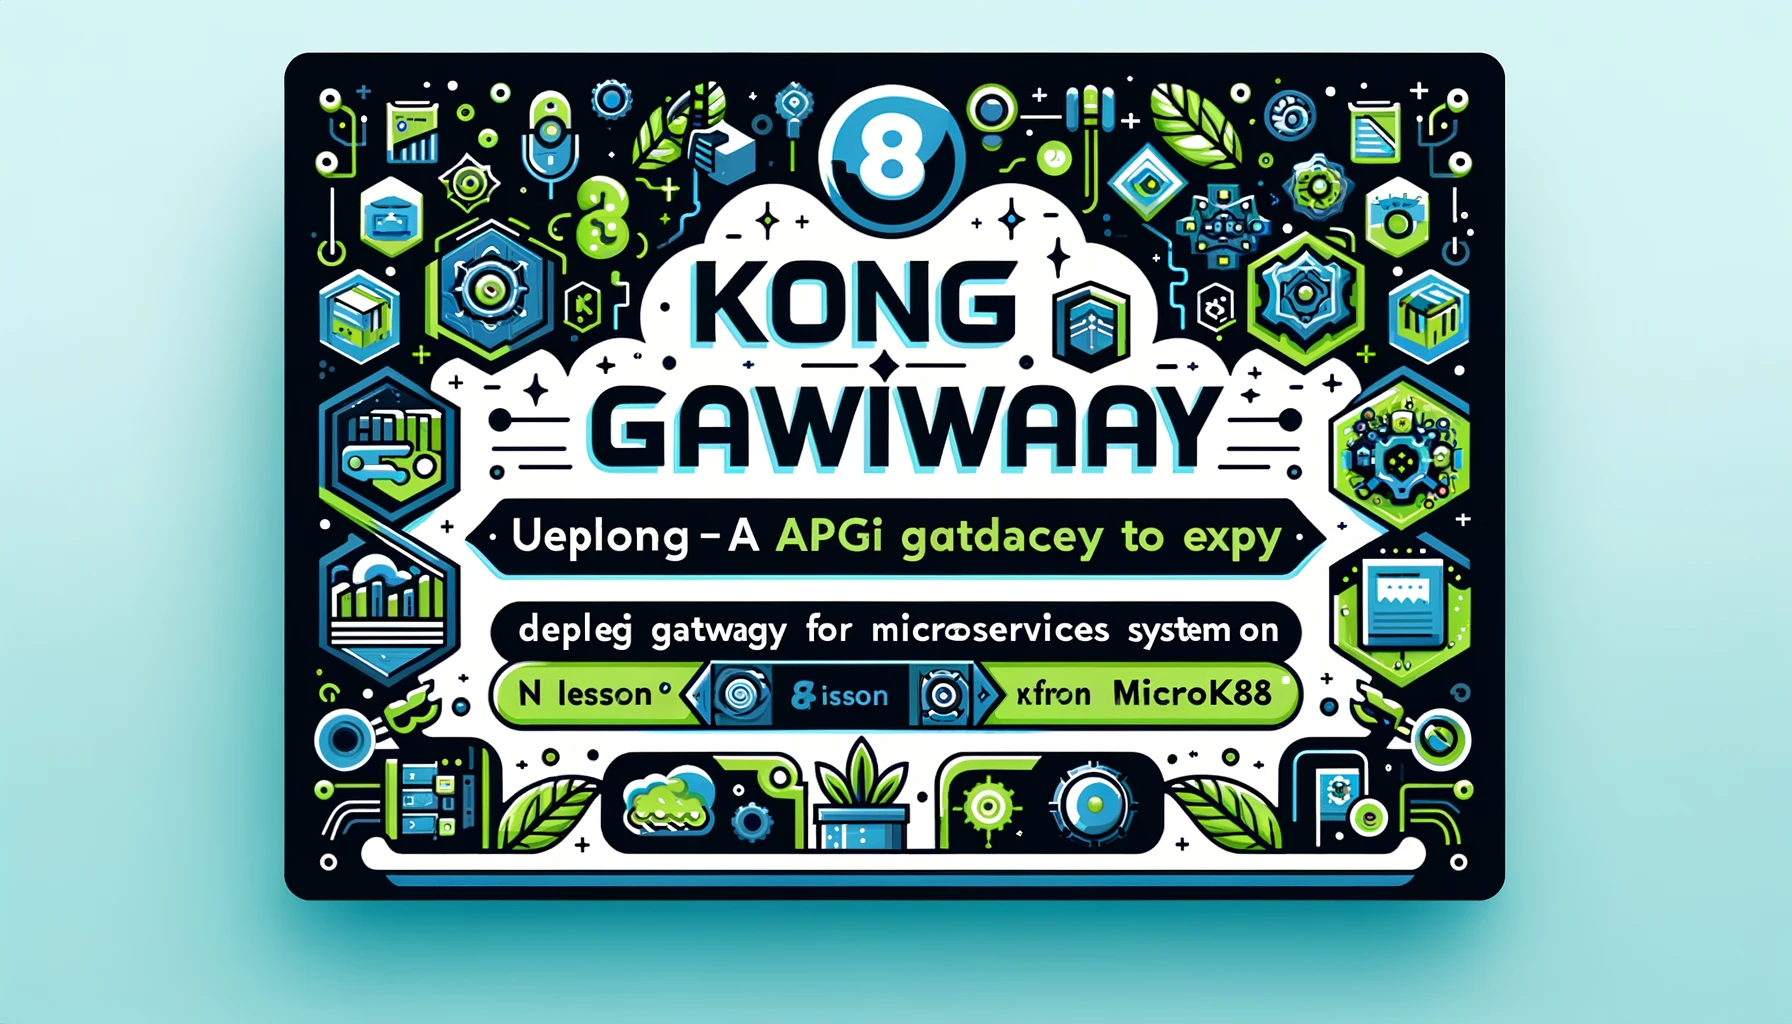 Bài 7 - Dùng Kong Gateway để triển khai API Gateway cho hệ thống Microservices trên Microk8s